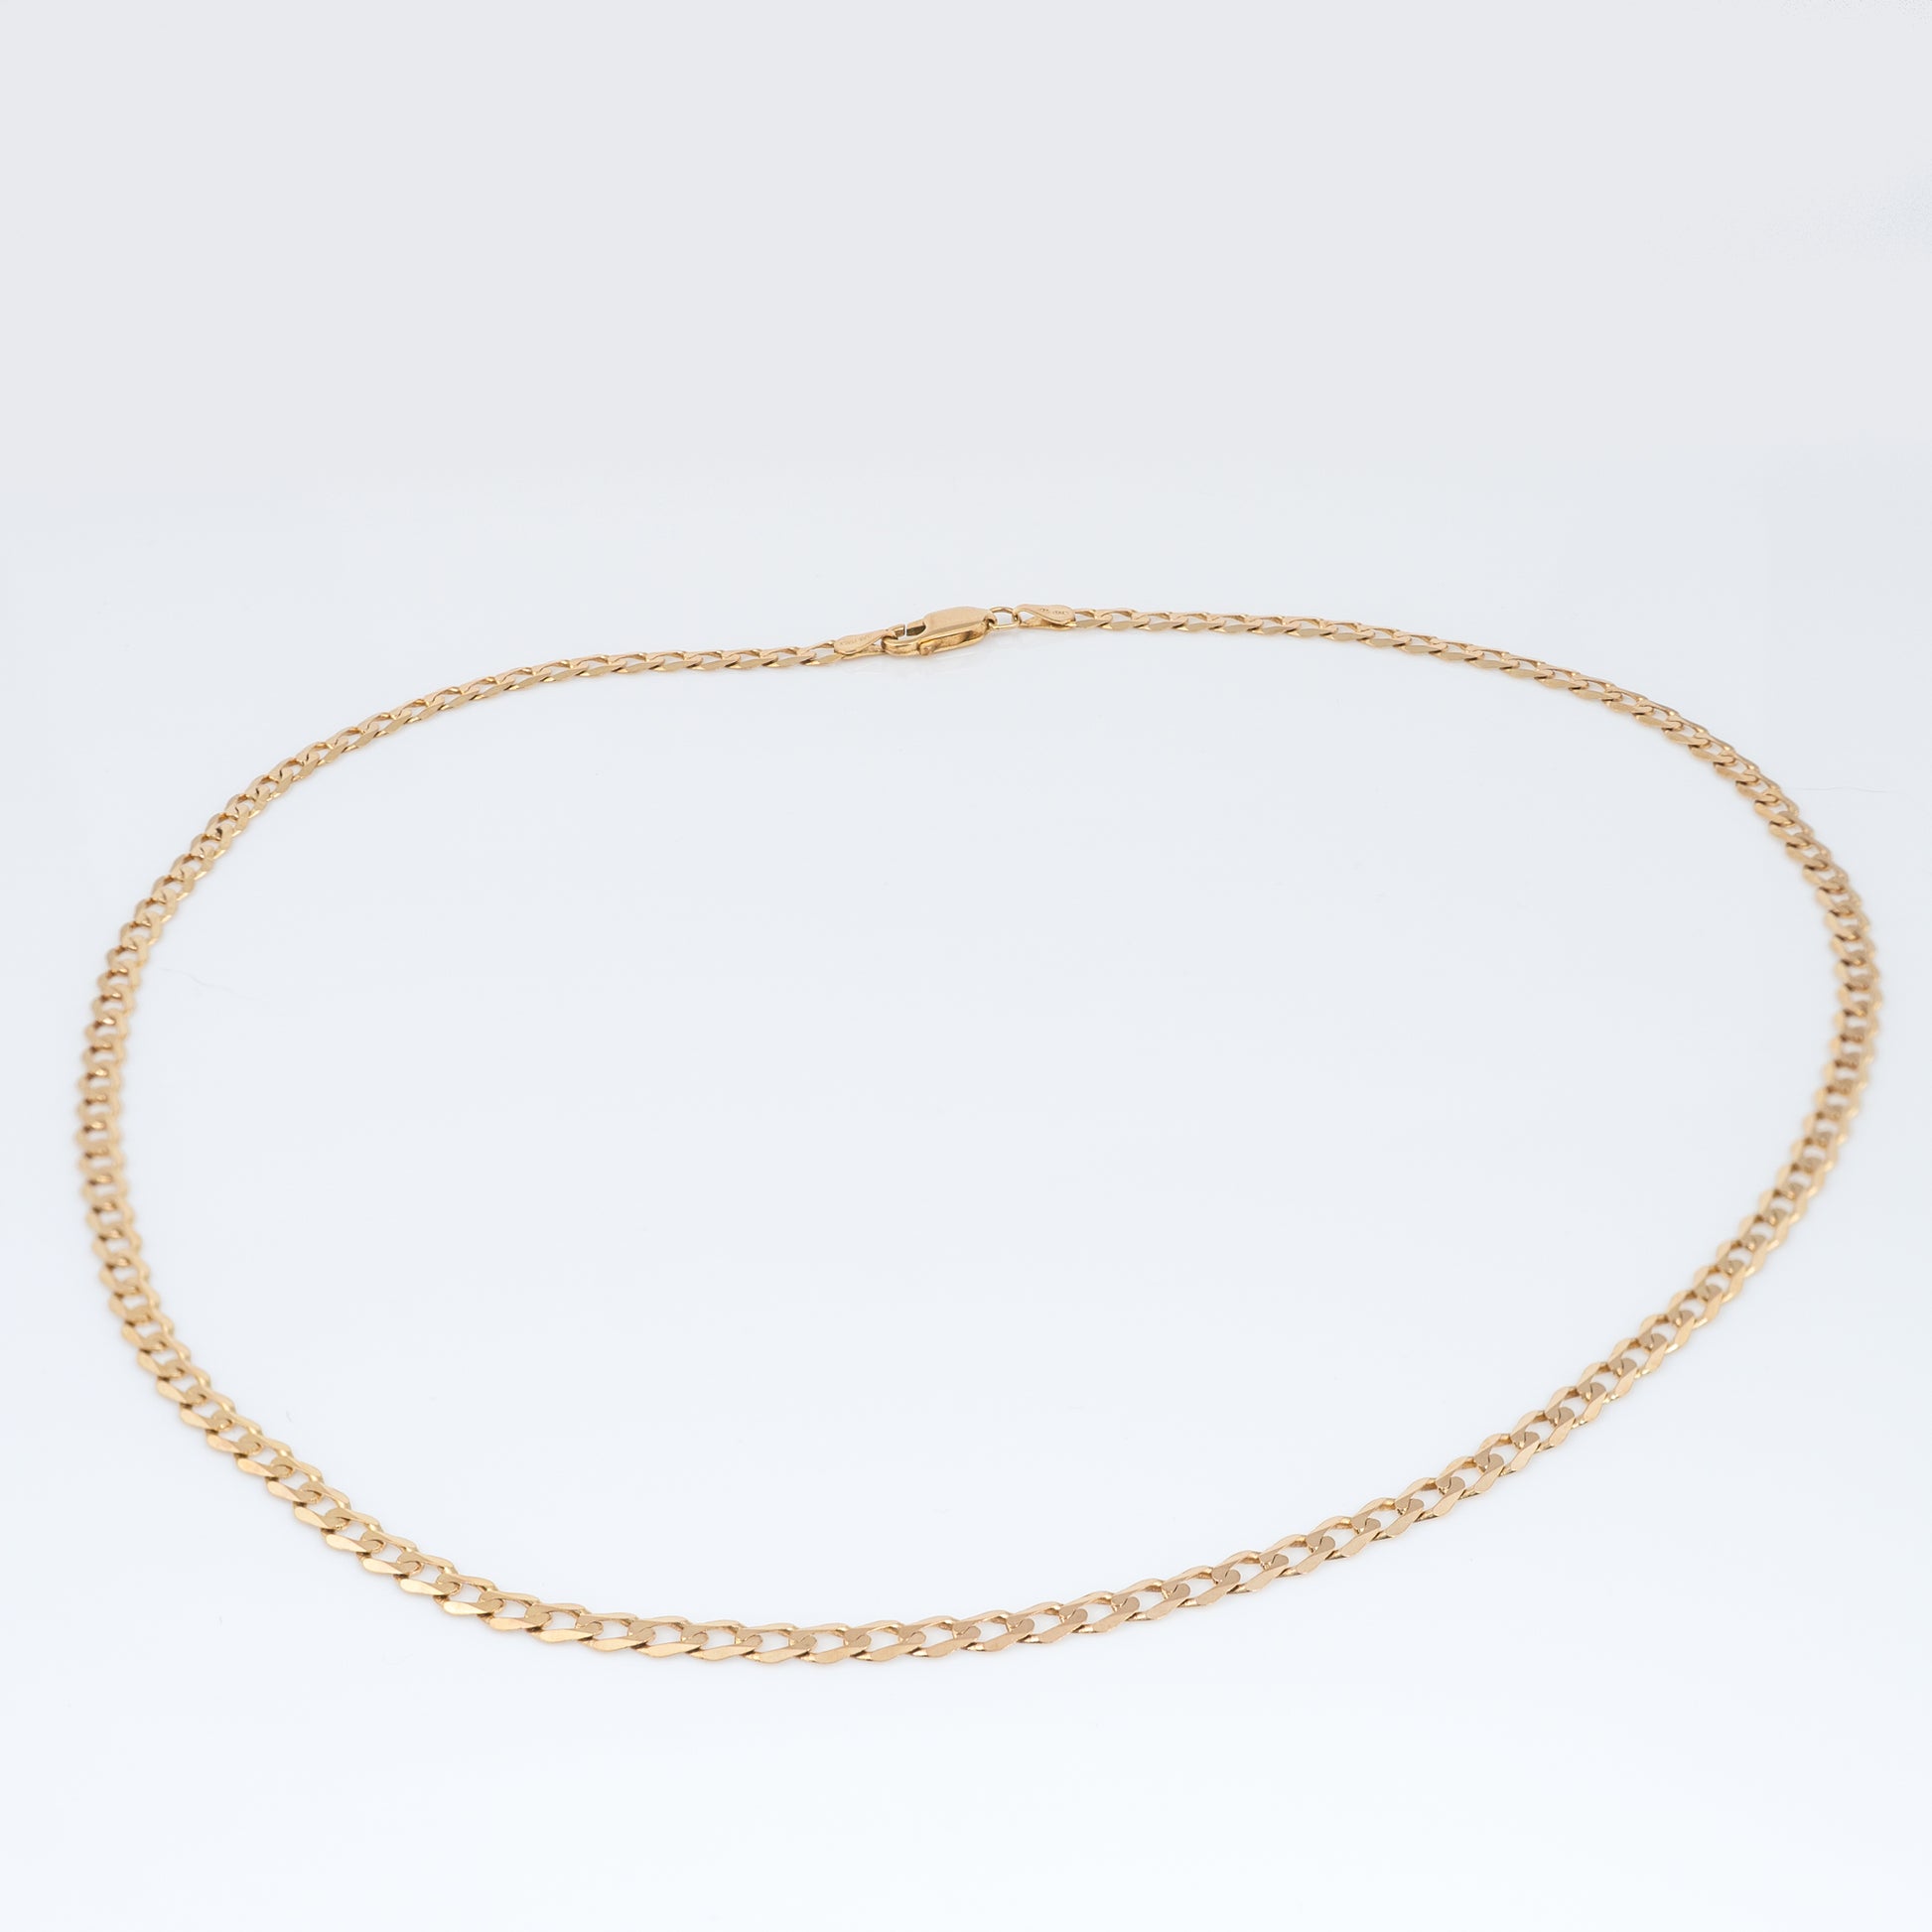 Second-hand Gold Jewellery Curb Chain Design, Hunters Fine Jewellery Shop